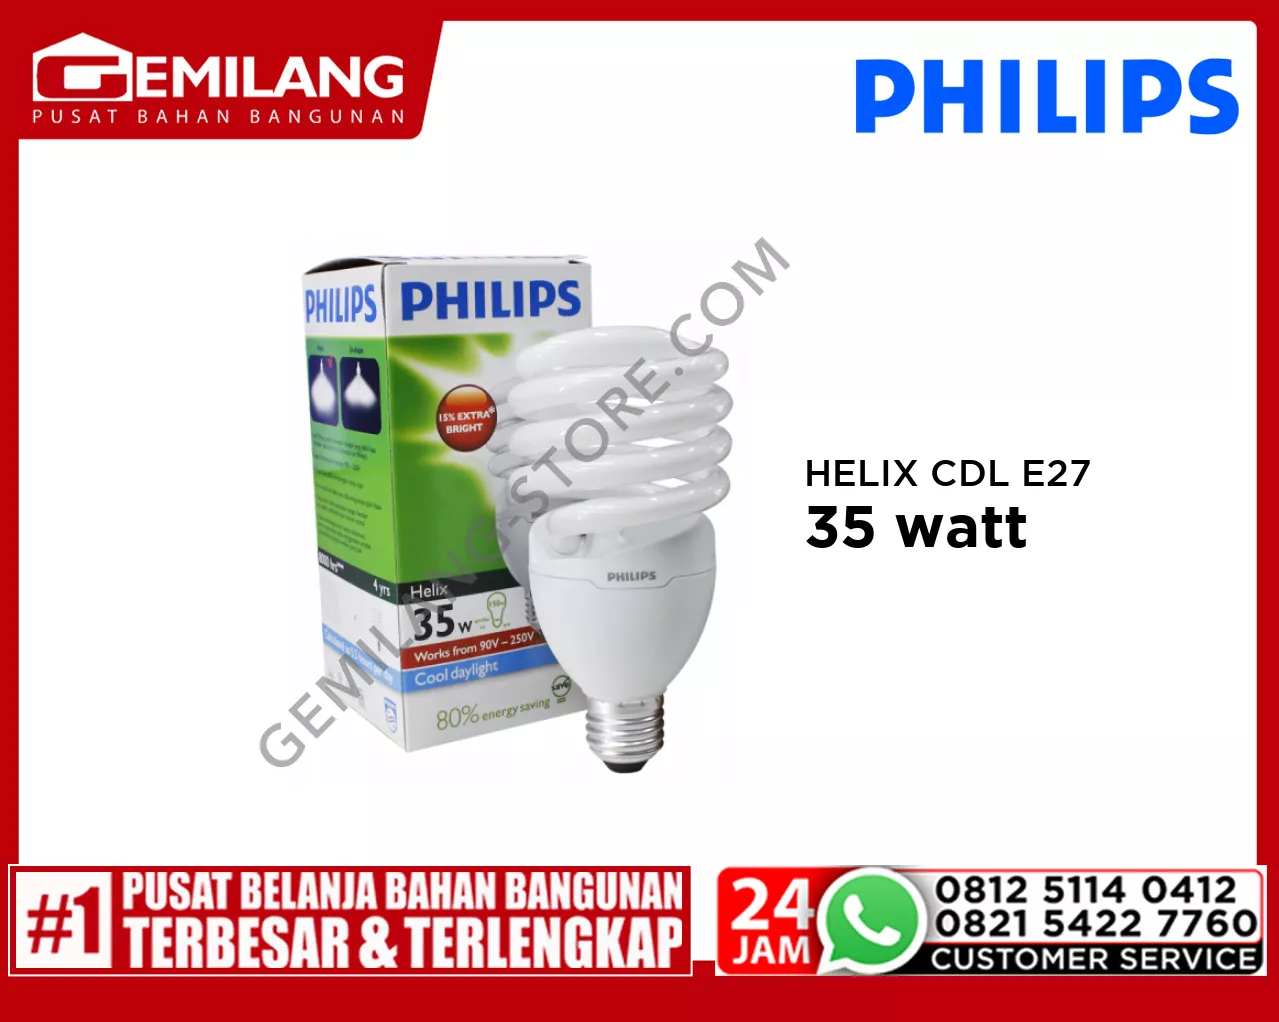 PHILIPS HELIX CDL E27 35w